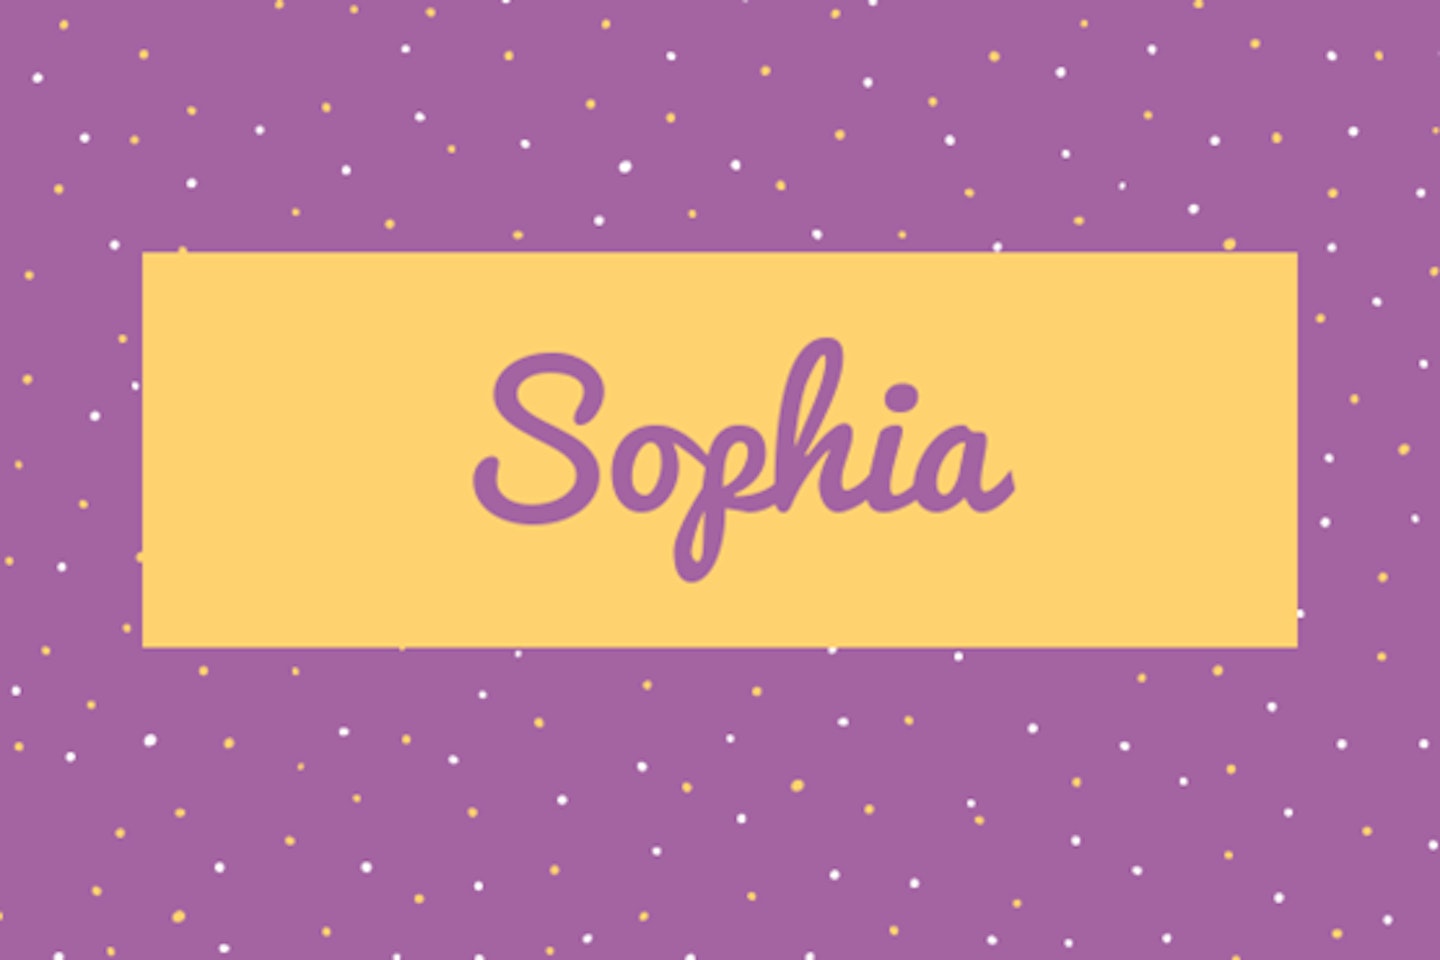 33) Sophia